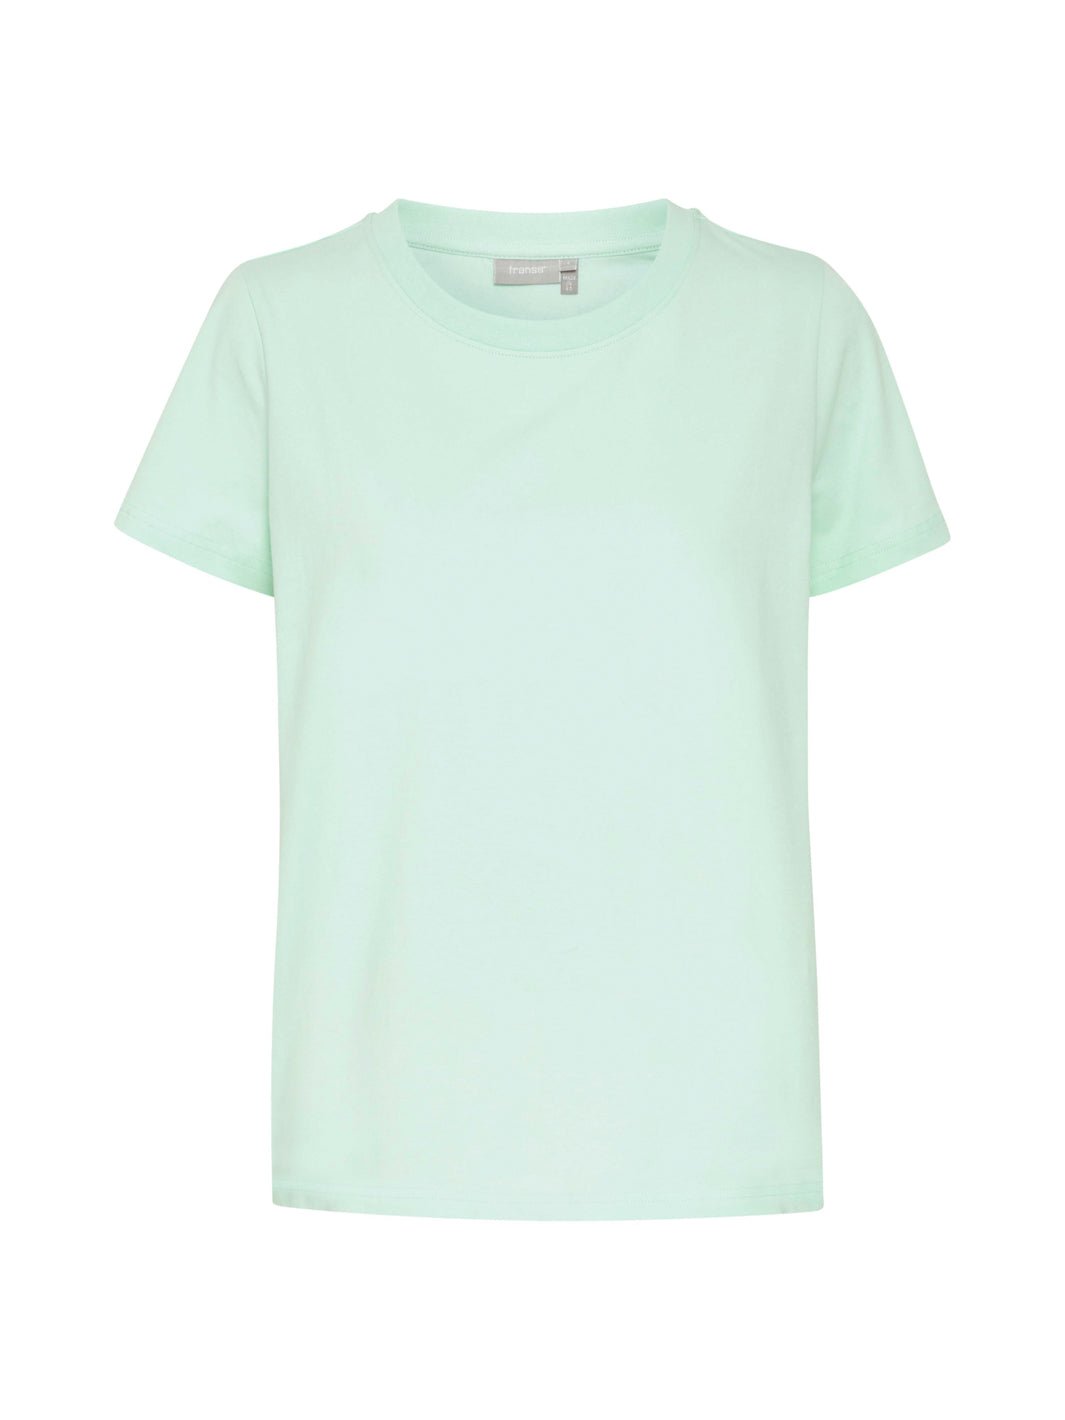 Fransa Zashoulder 1 t-shirt brook green - Online-Mode